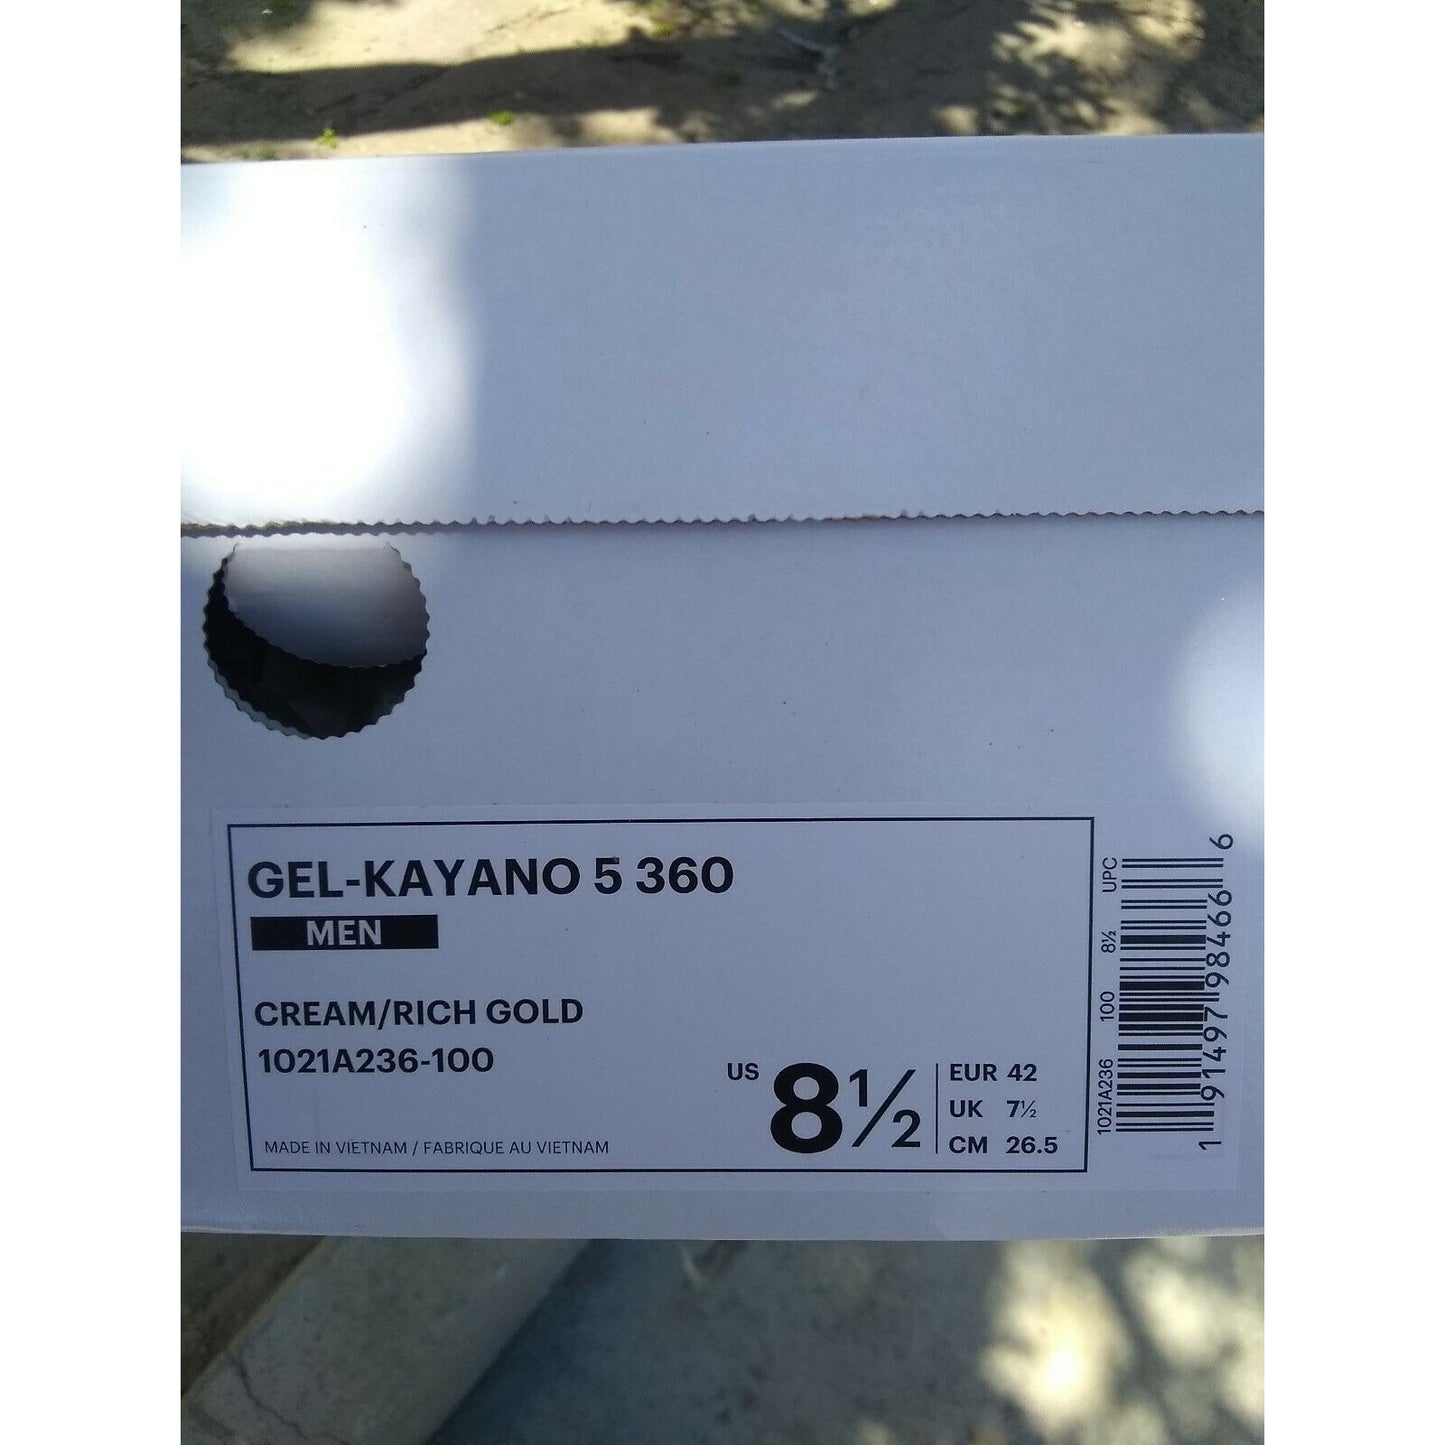 Asics Kayano 5 360 Cream Rich Gold Size 8.5 Men US running shoes